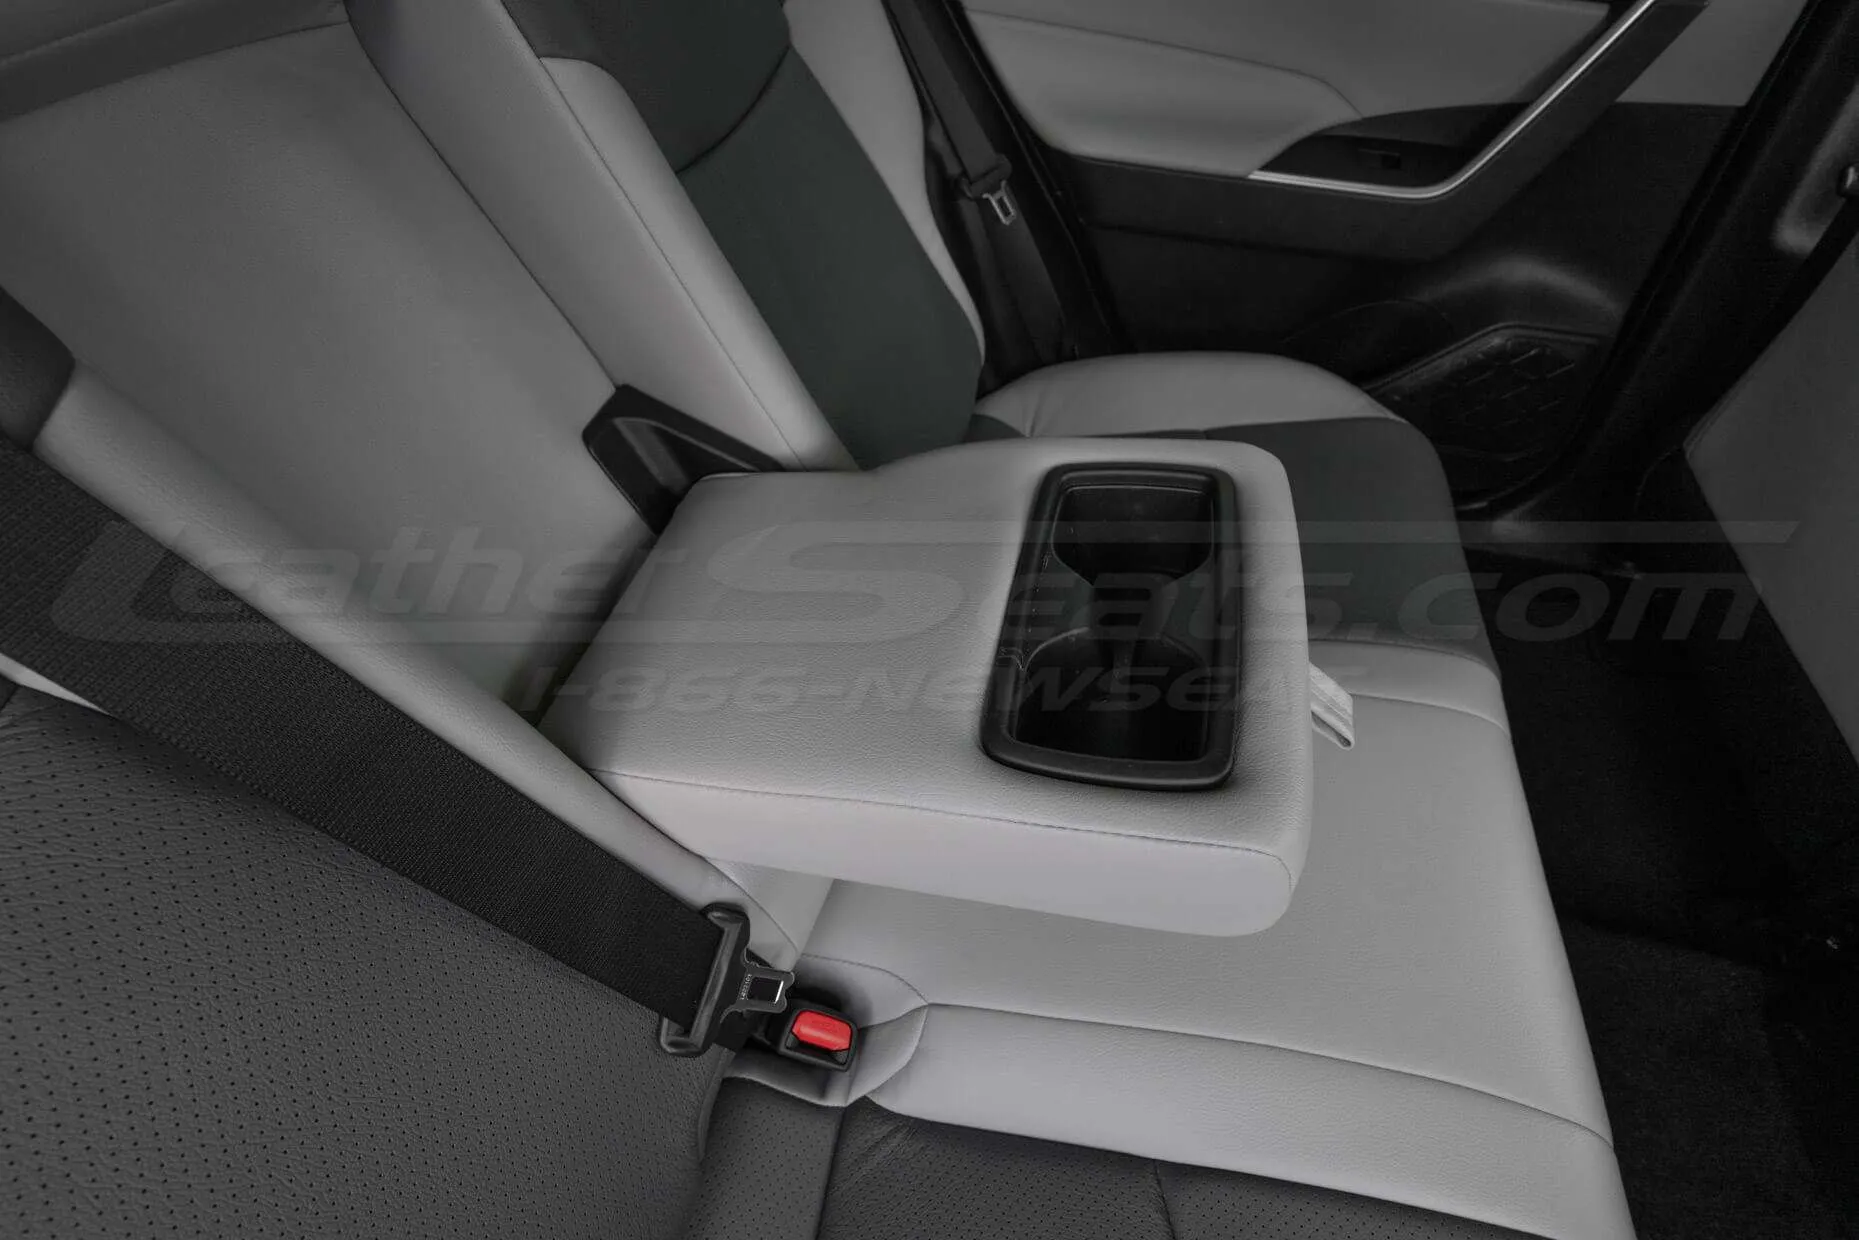 Rear seat leather armrest/cup holder